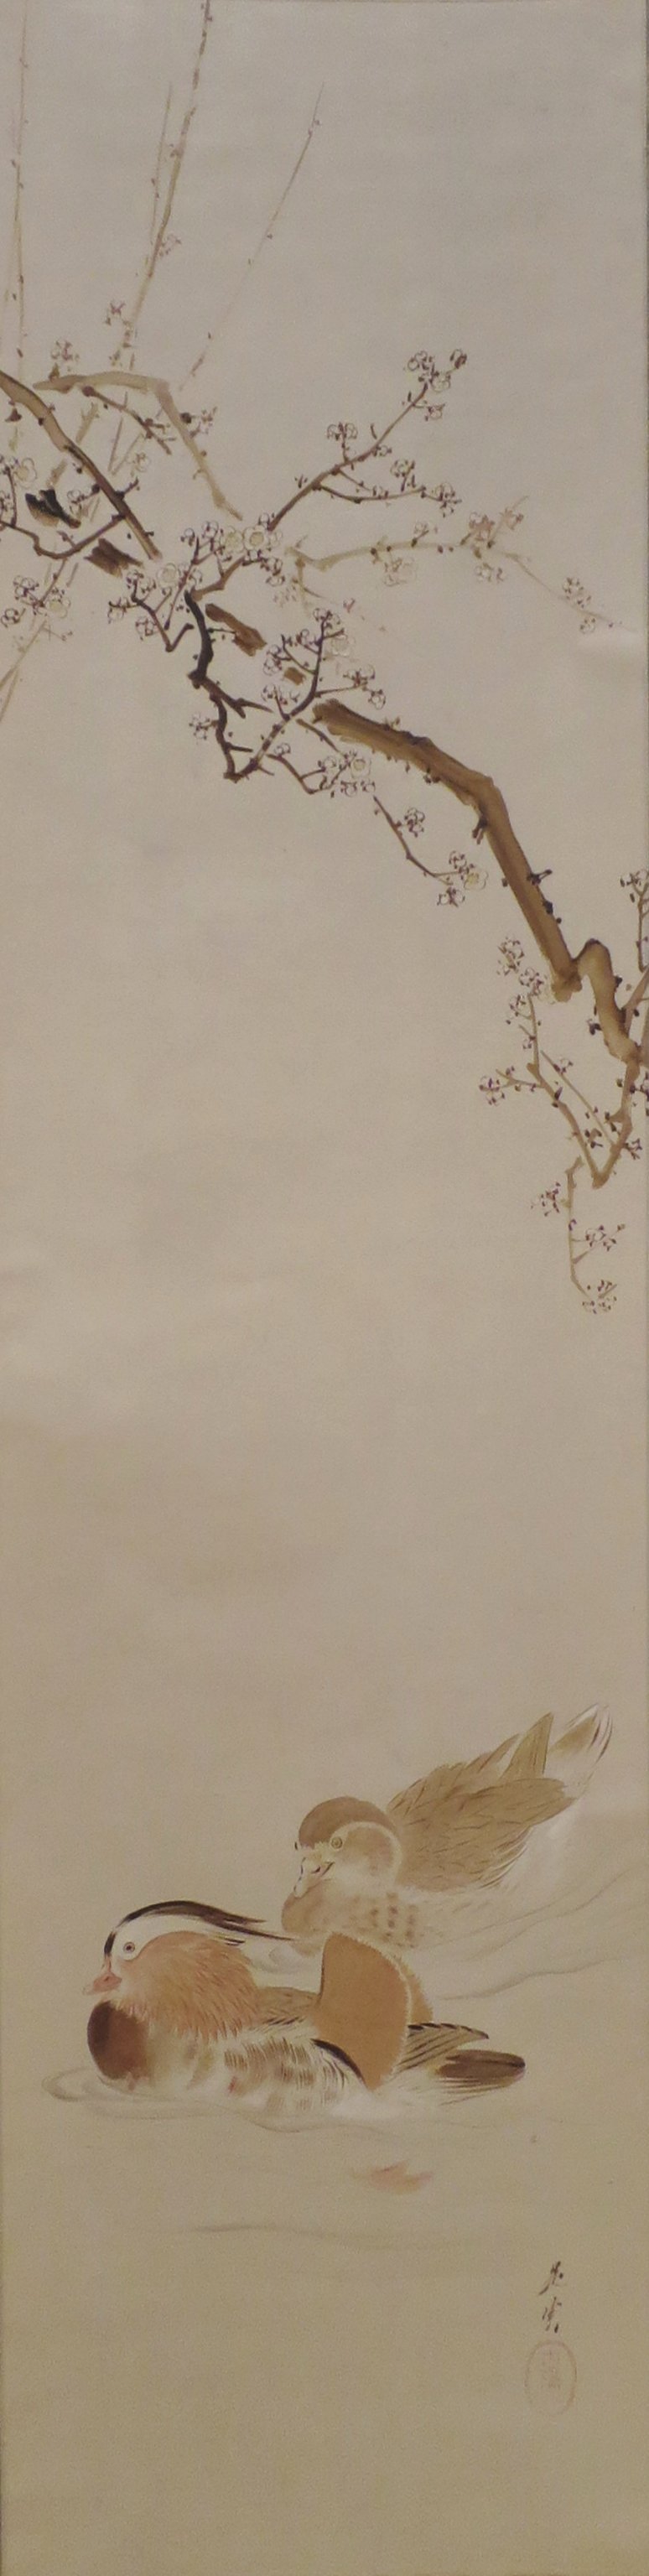 'Plum Branch and Mandarin Ducks' by Shibata Zeshin, c. 1870s, lacquer on paper, HMA 4649.1.JPG